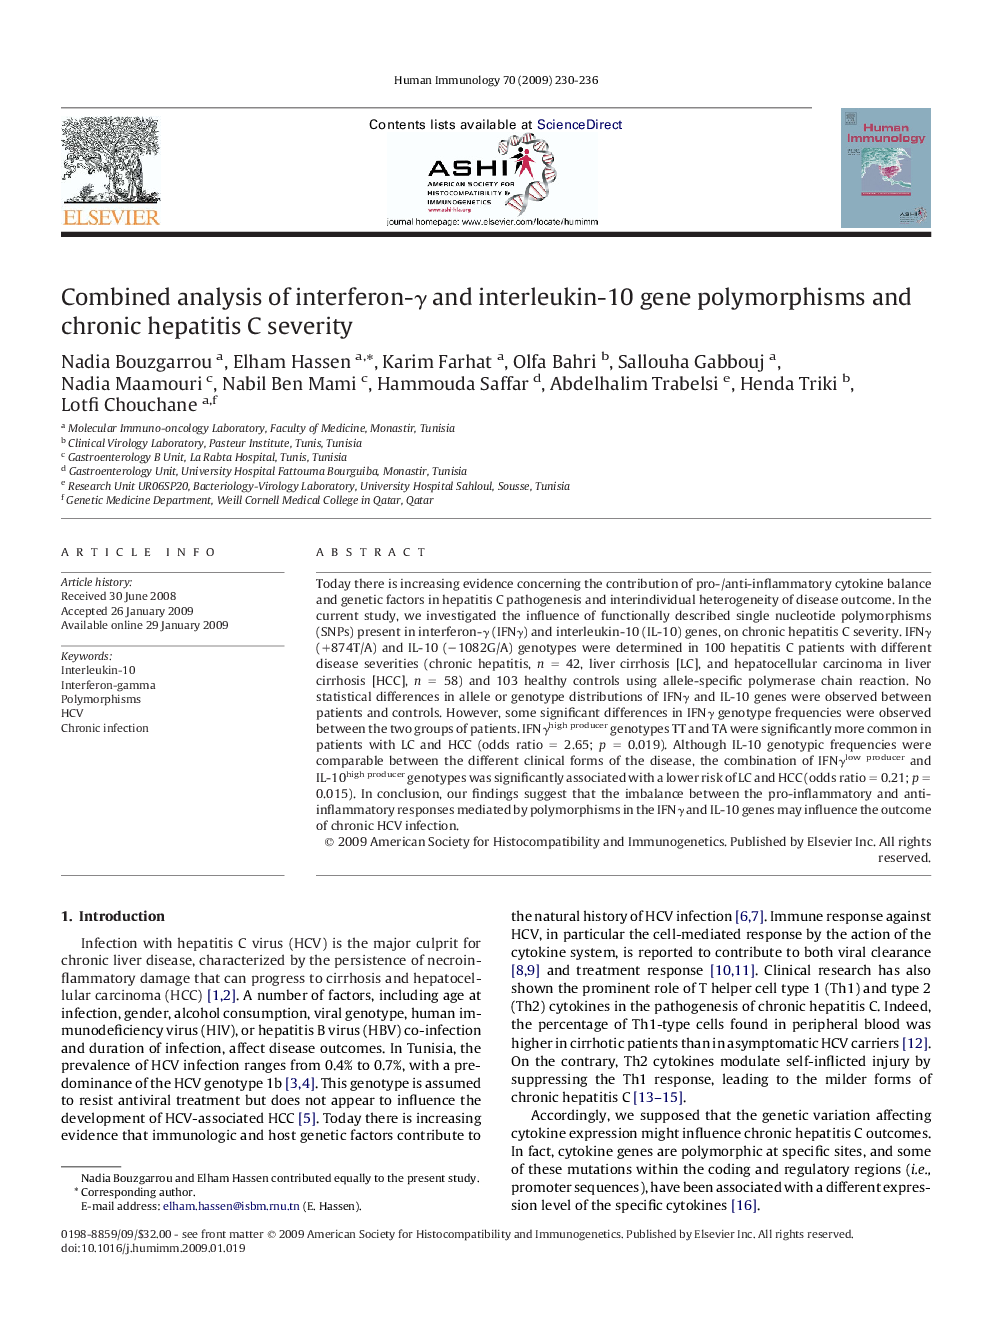 Combined analysis of interferon-γ and interleukin-10 gene polymorphisms and chronic hepatitis C severity 